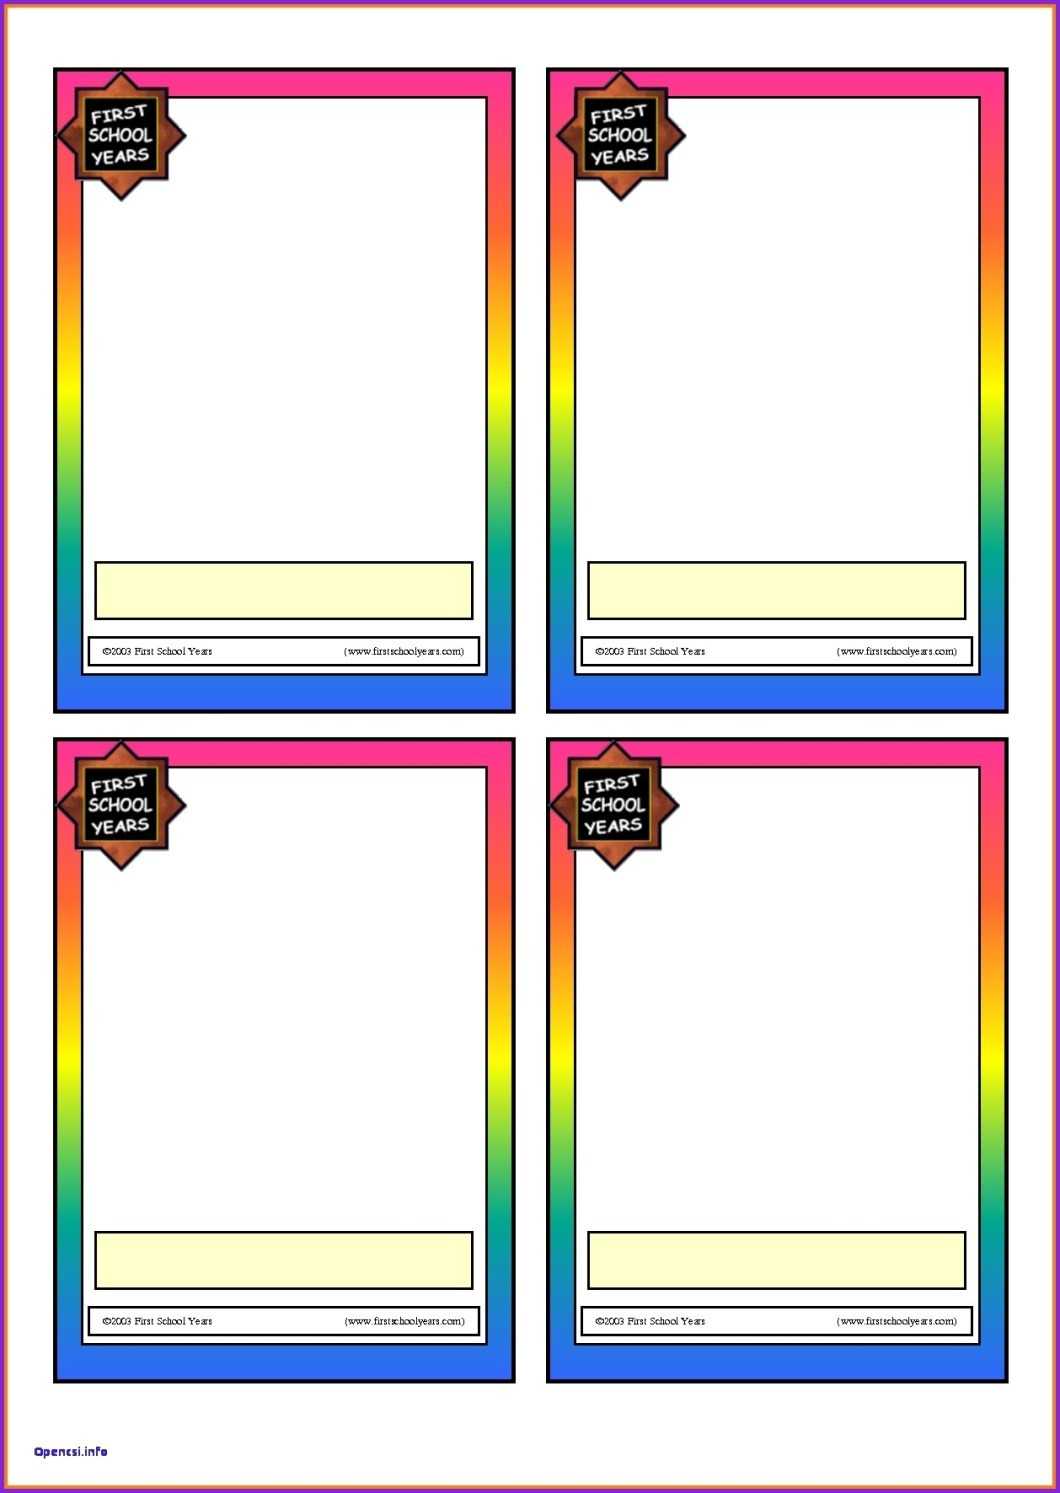 Printable Blank Flash Cards Cardjdi Org Flashcards With Free Printable Blank Flash Cards Template